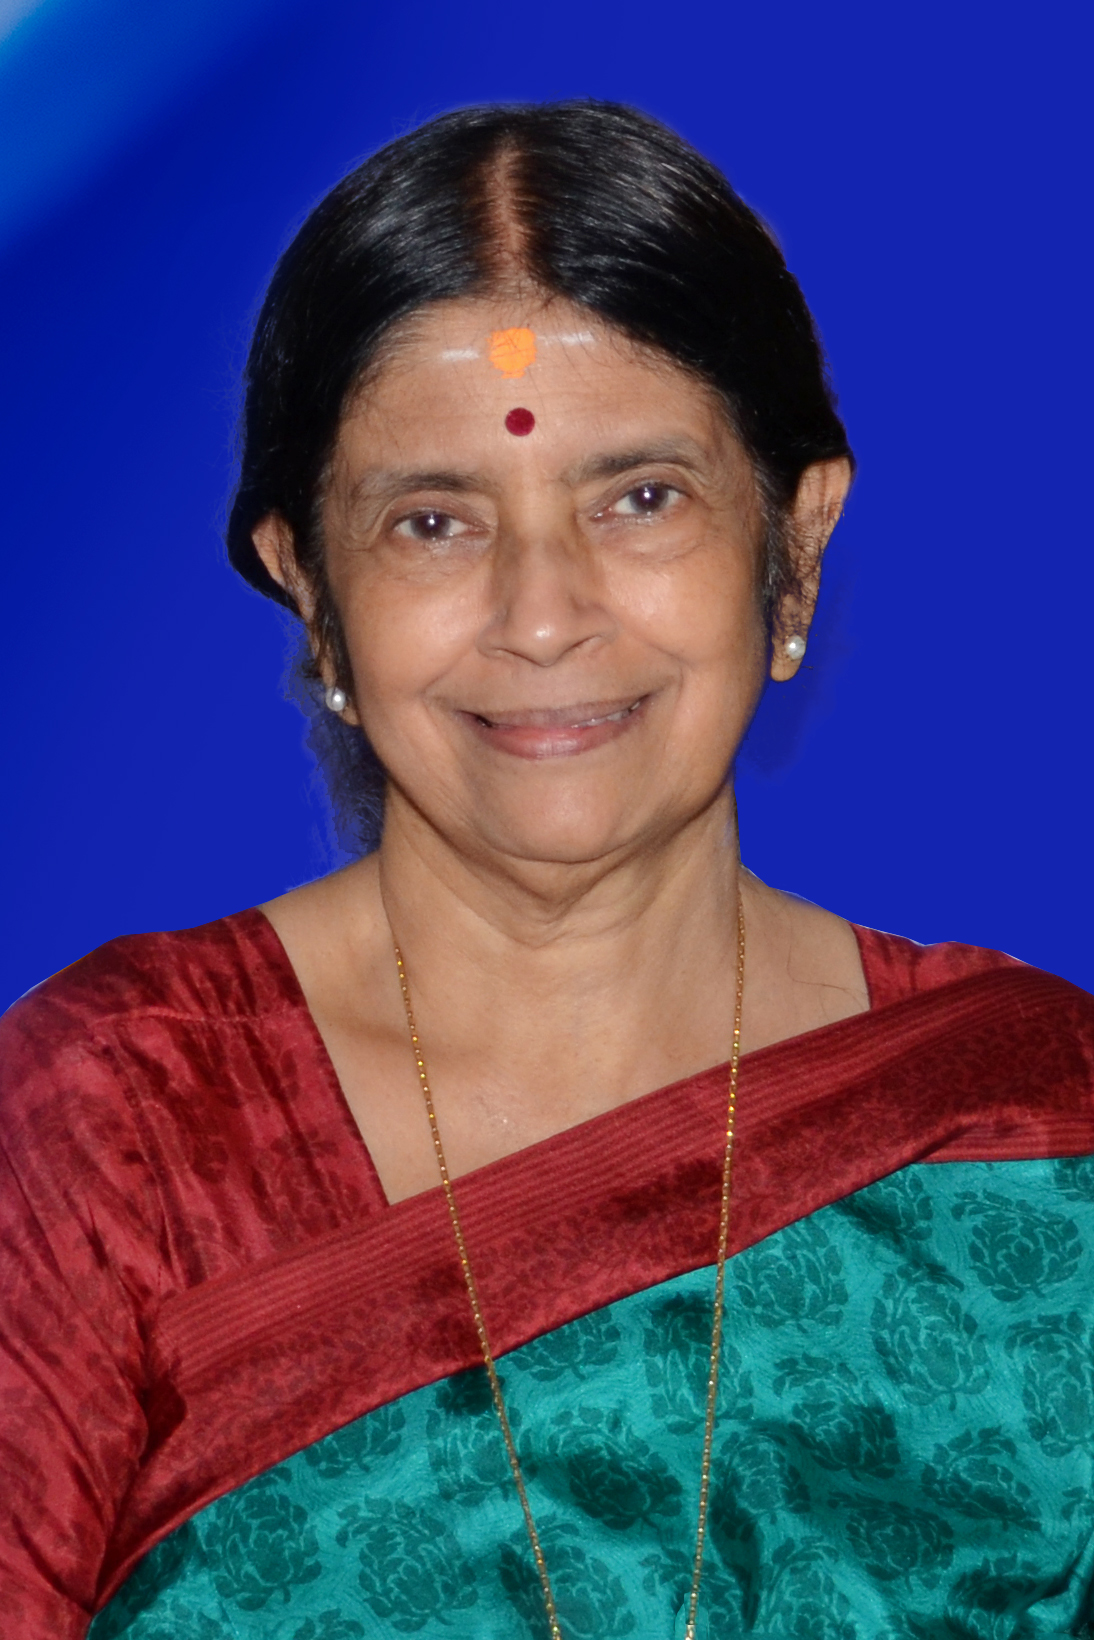 Aswathi Thirunal Gowri Lakshmi Bayi - Wikipedia